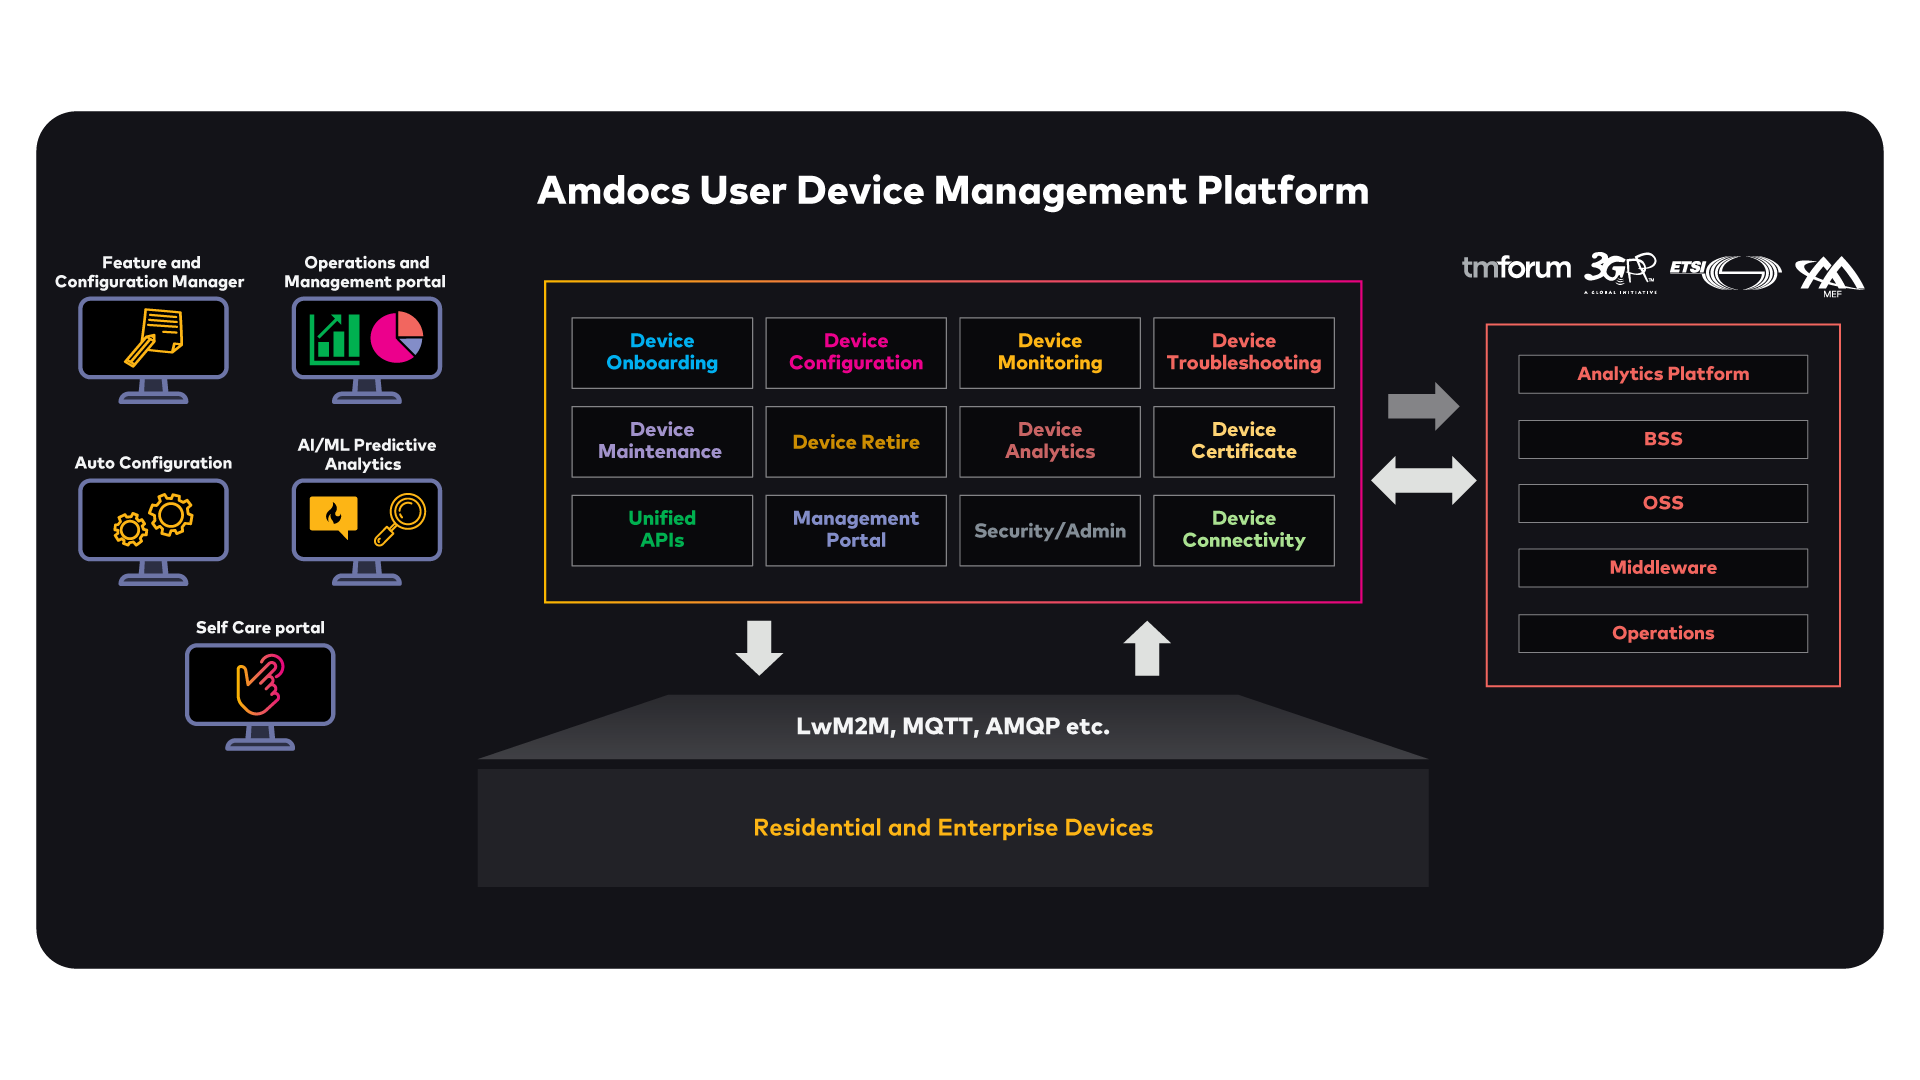 Amdocs User Device Management Platform